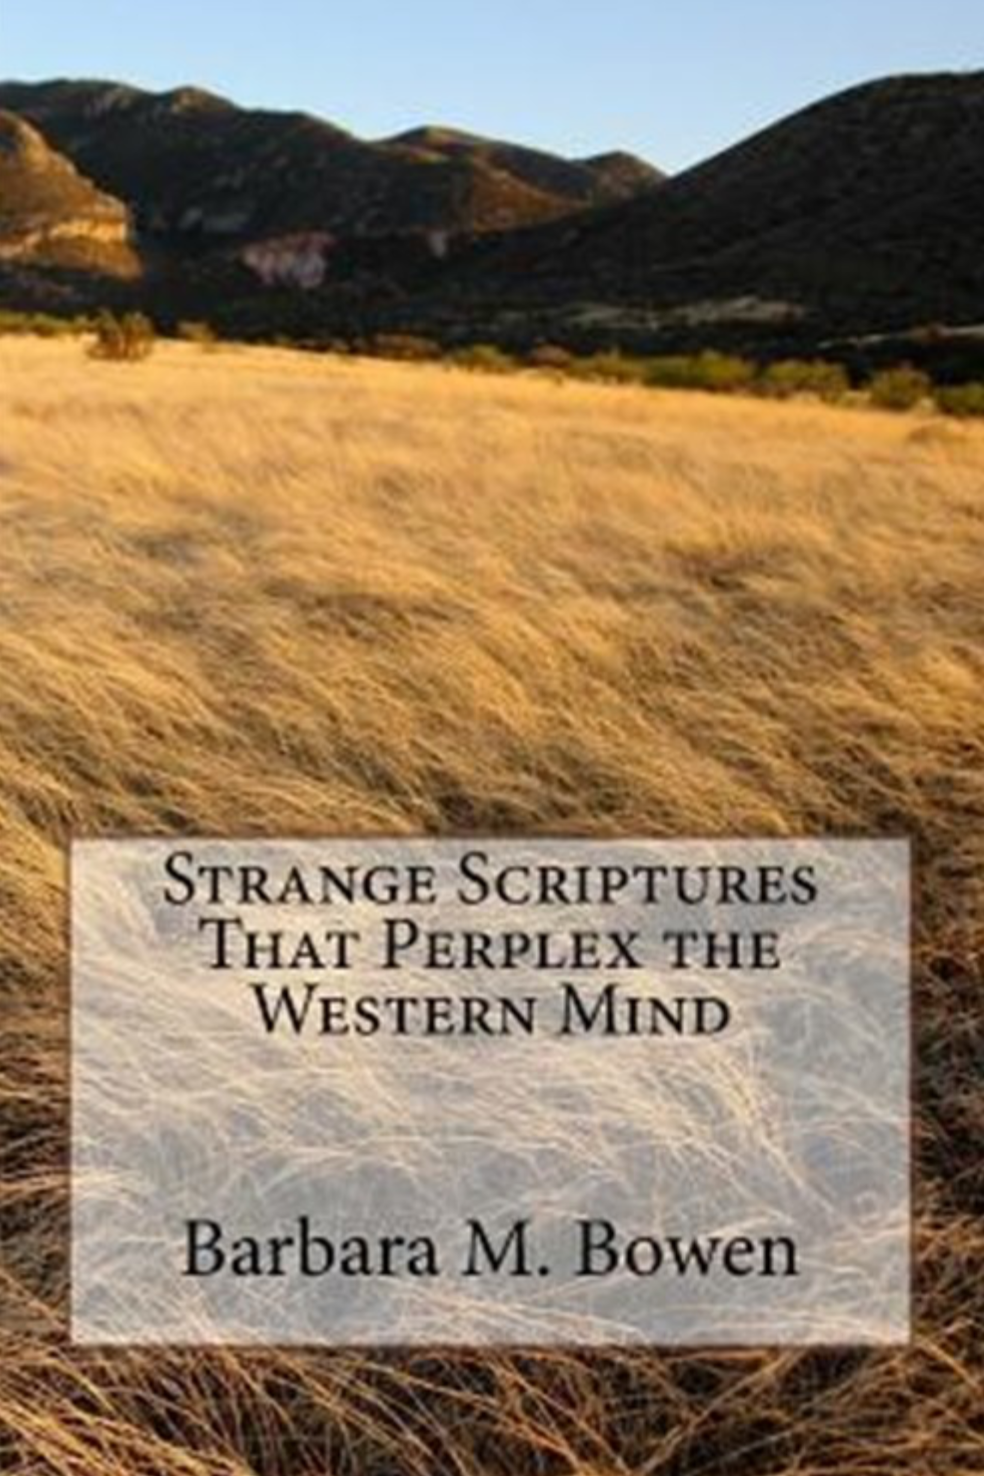 Strange Scriptures That Perplex the Western Mind BOOK COVER